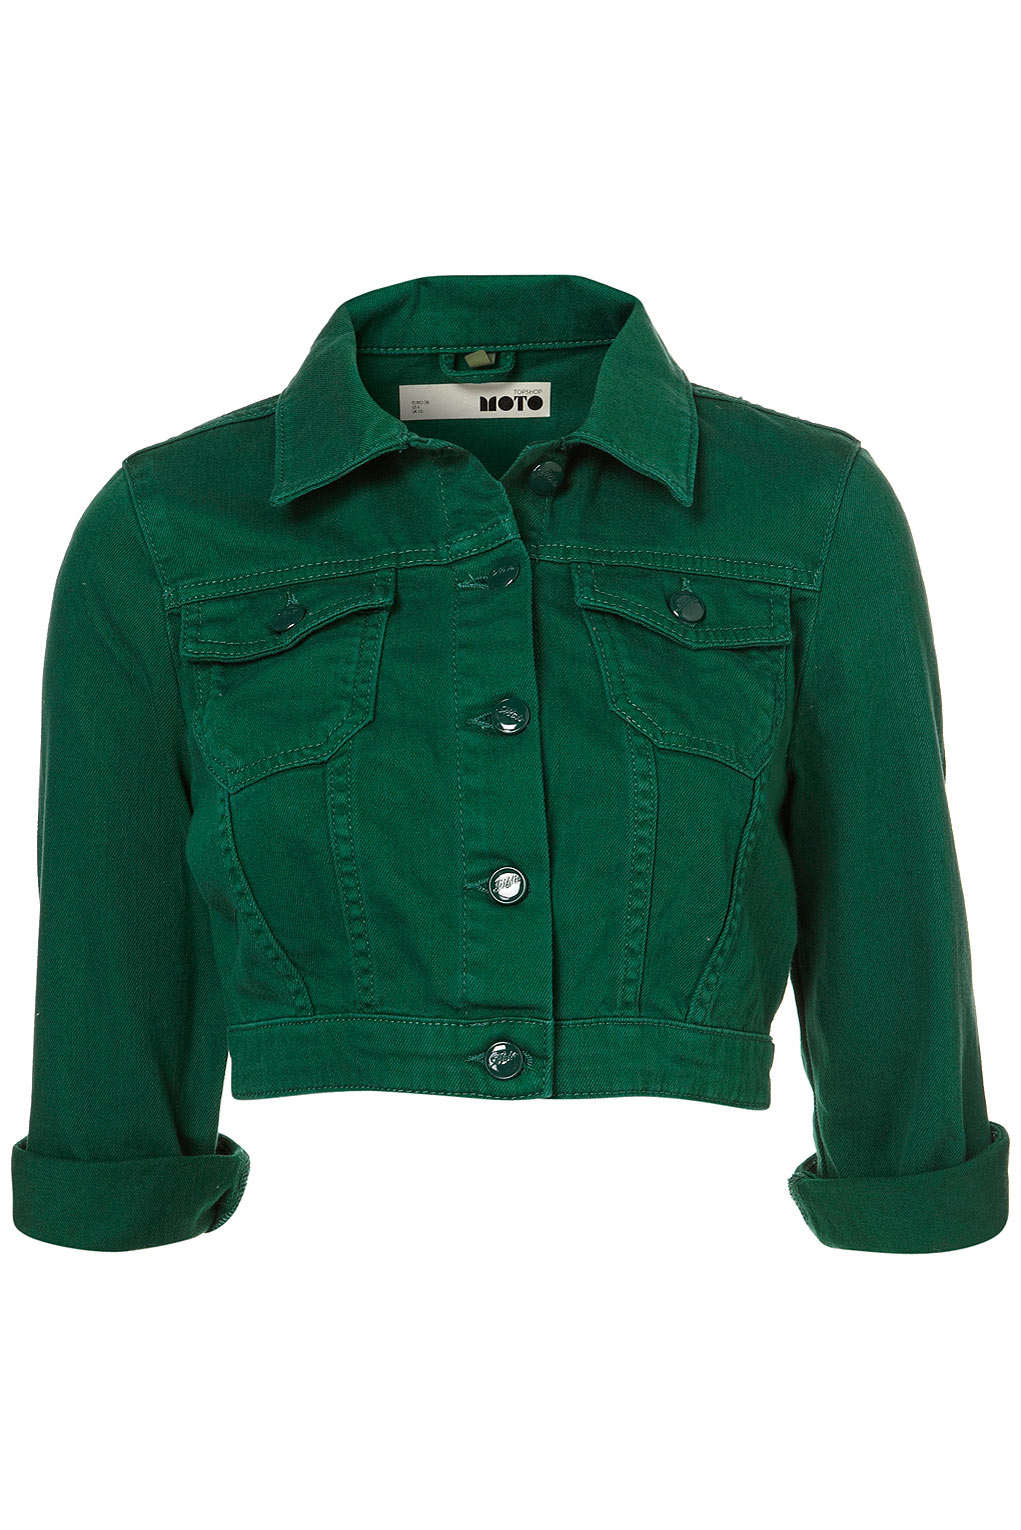 Moto Denim Western Crop Jacket in Green (emerald) Lyst